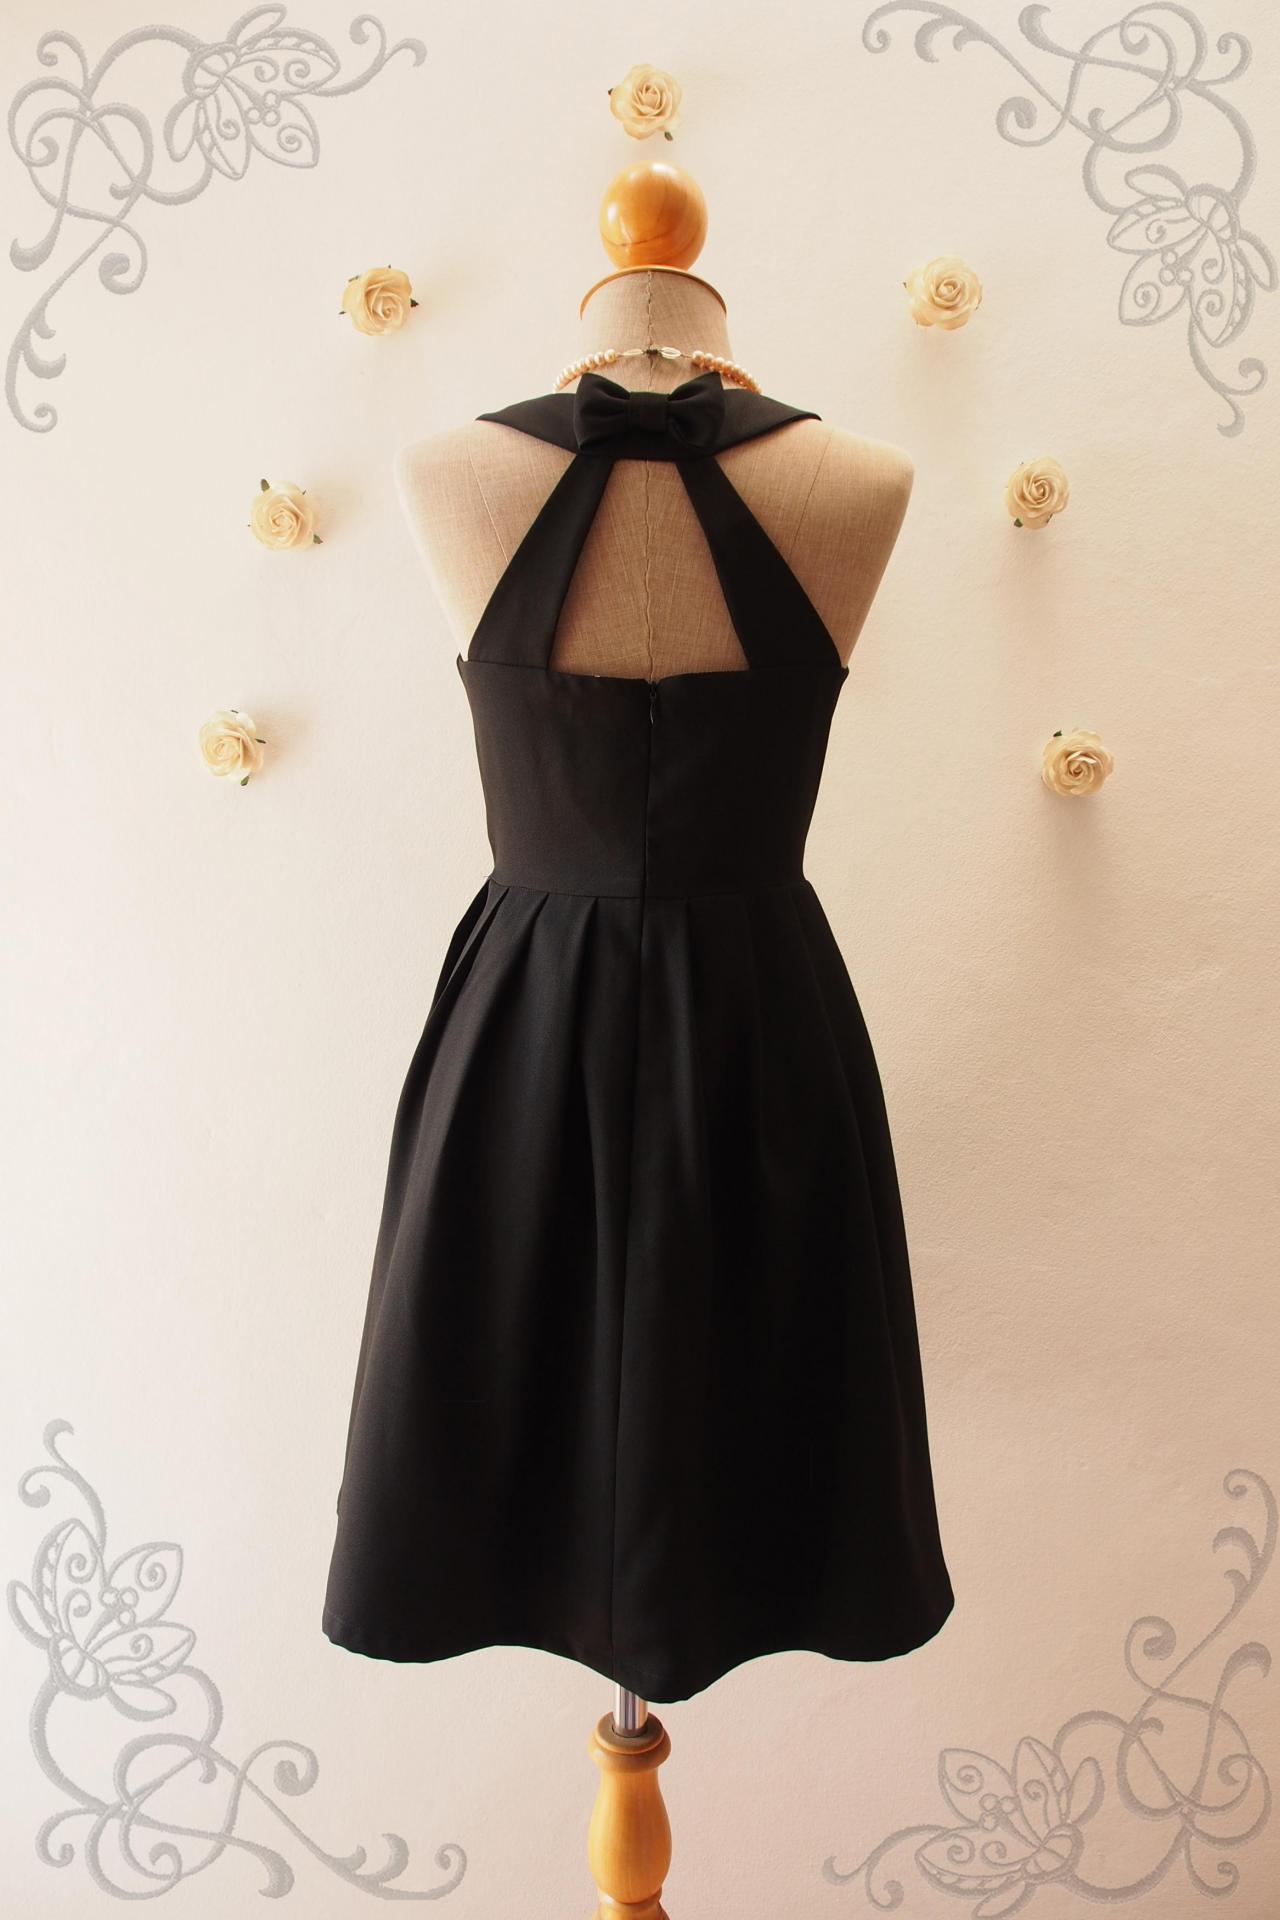 Love Potion - Black Backless Dress, Black Prom Dress, Black Cocktail Dress, Black Bridesmaid Dress, Black Dress, Blue Party Dress, Vintage